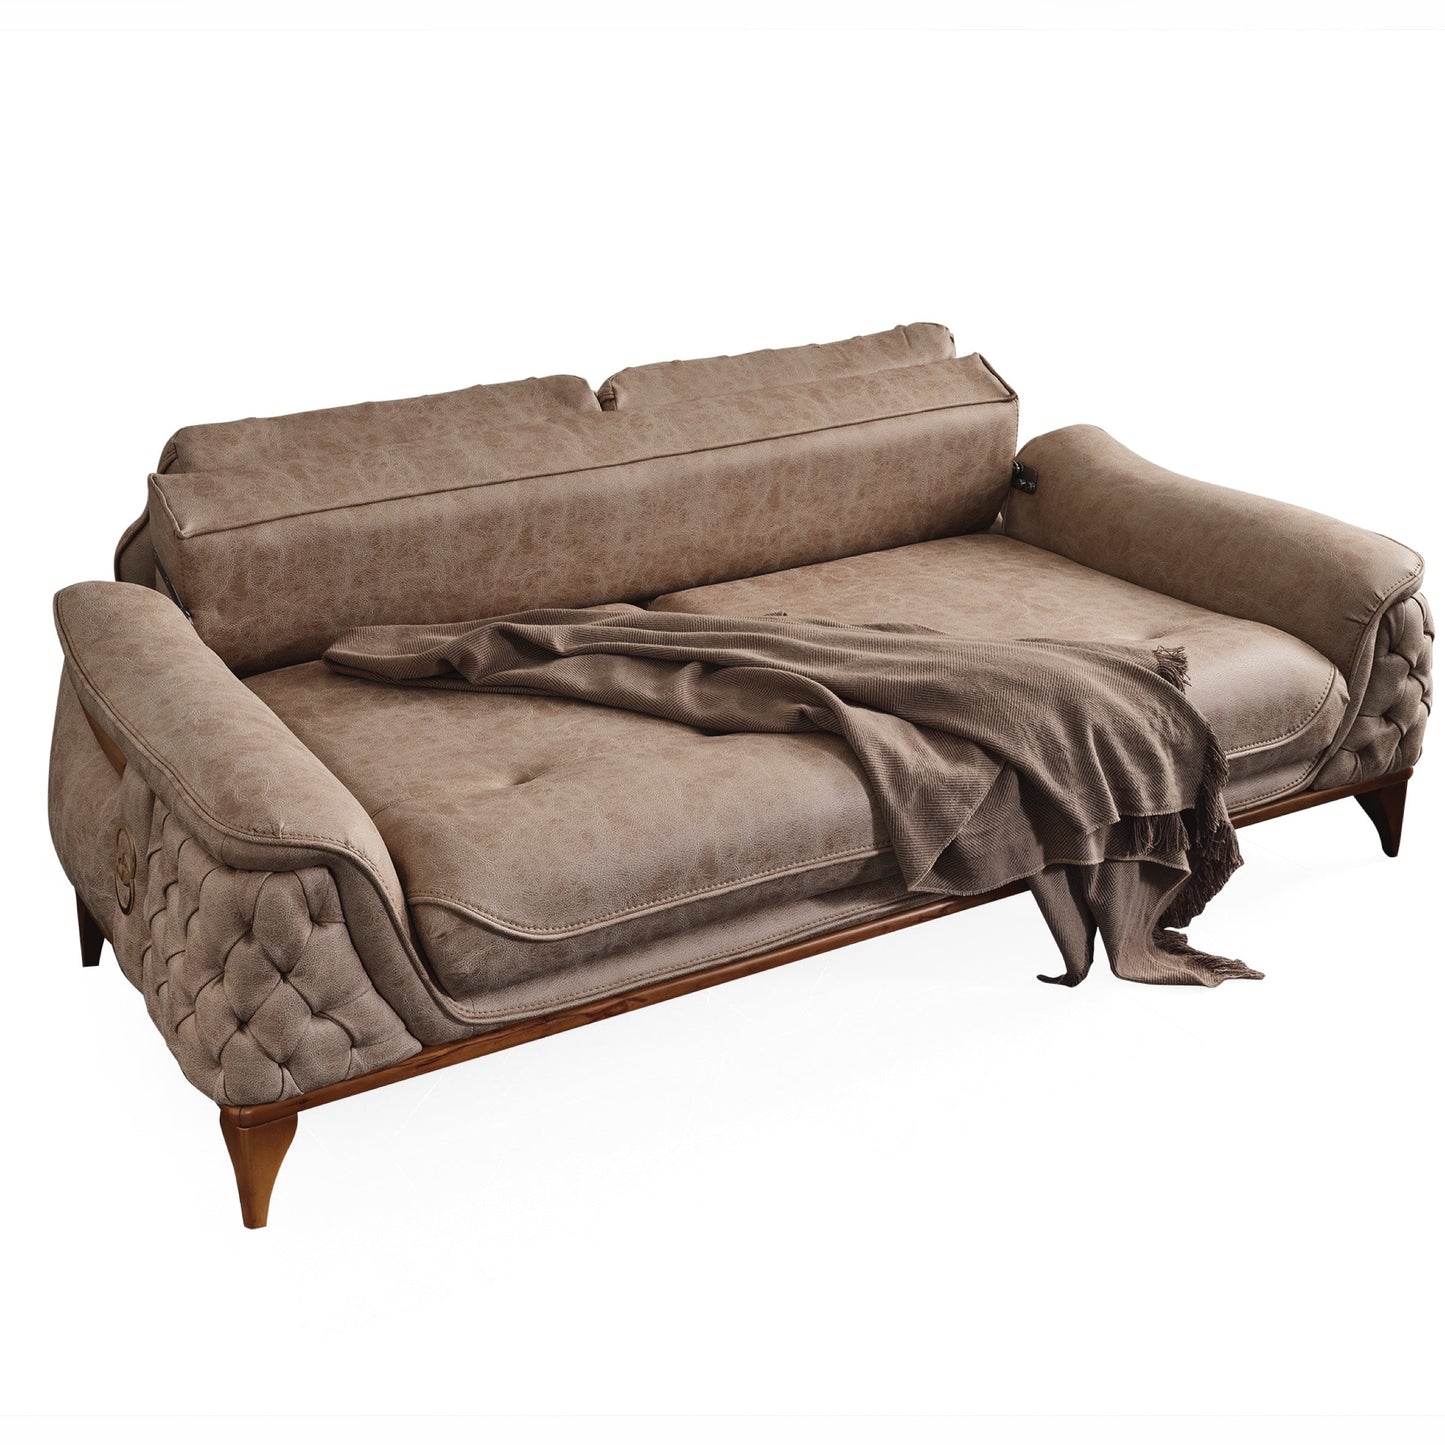 sofa-furniture-comfort-throw blankets-sofa beds